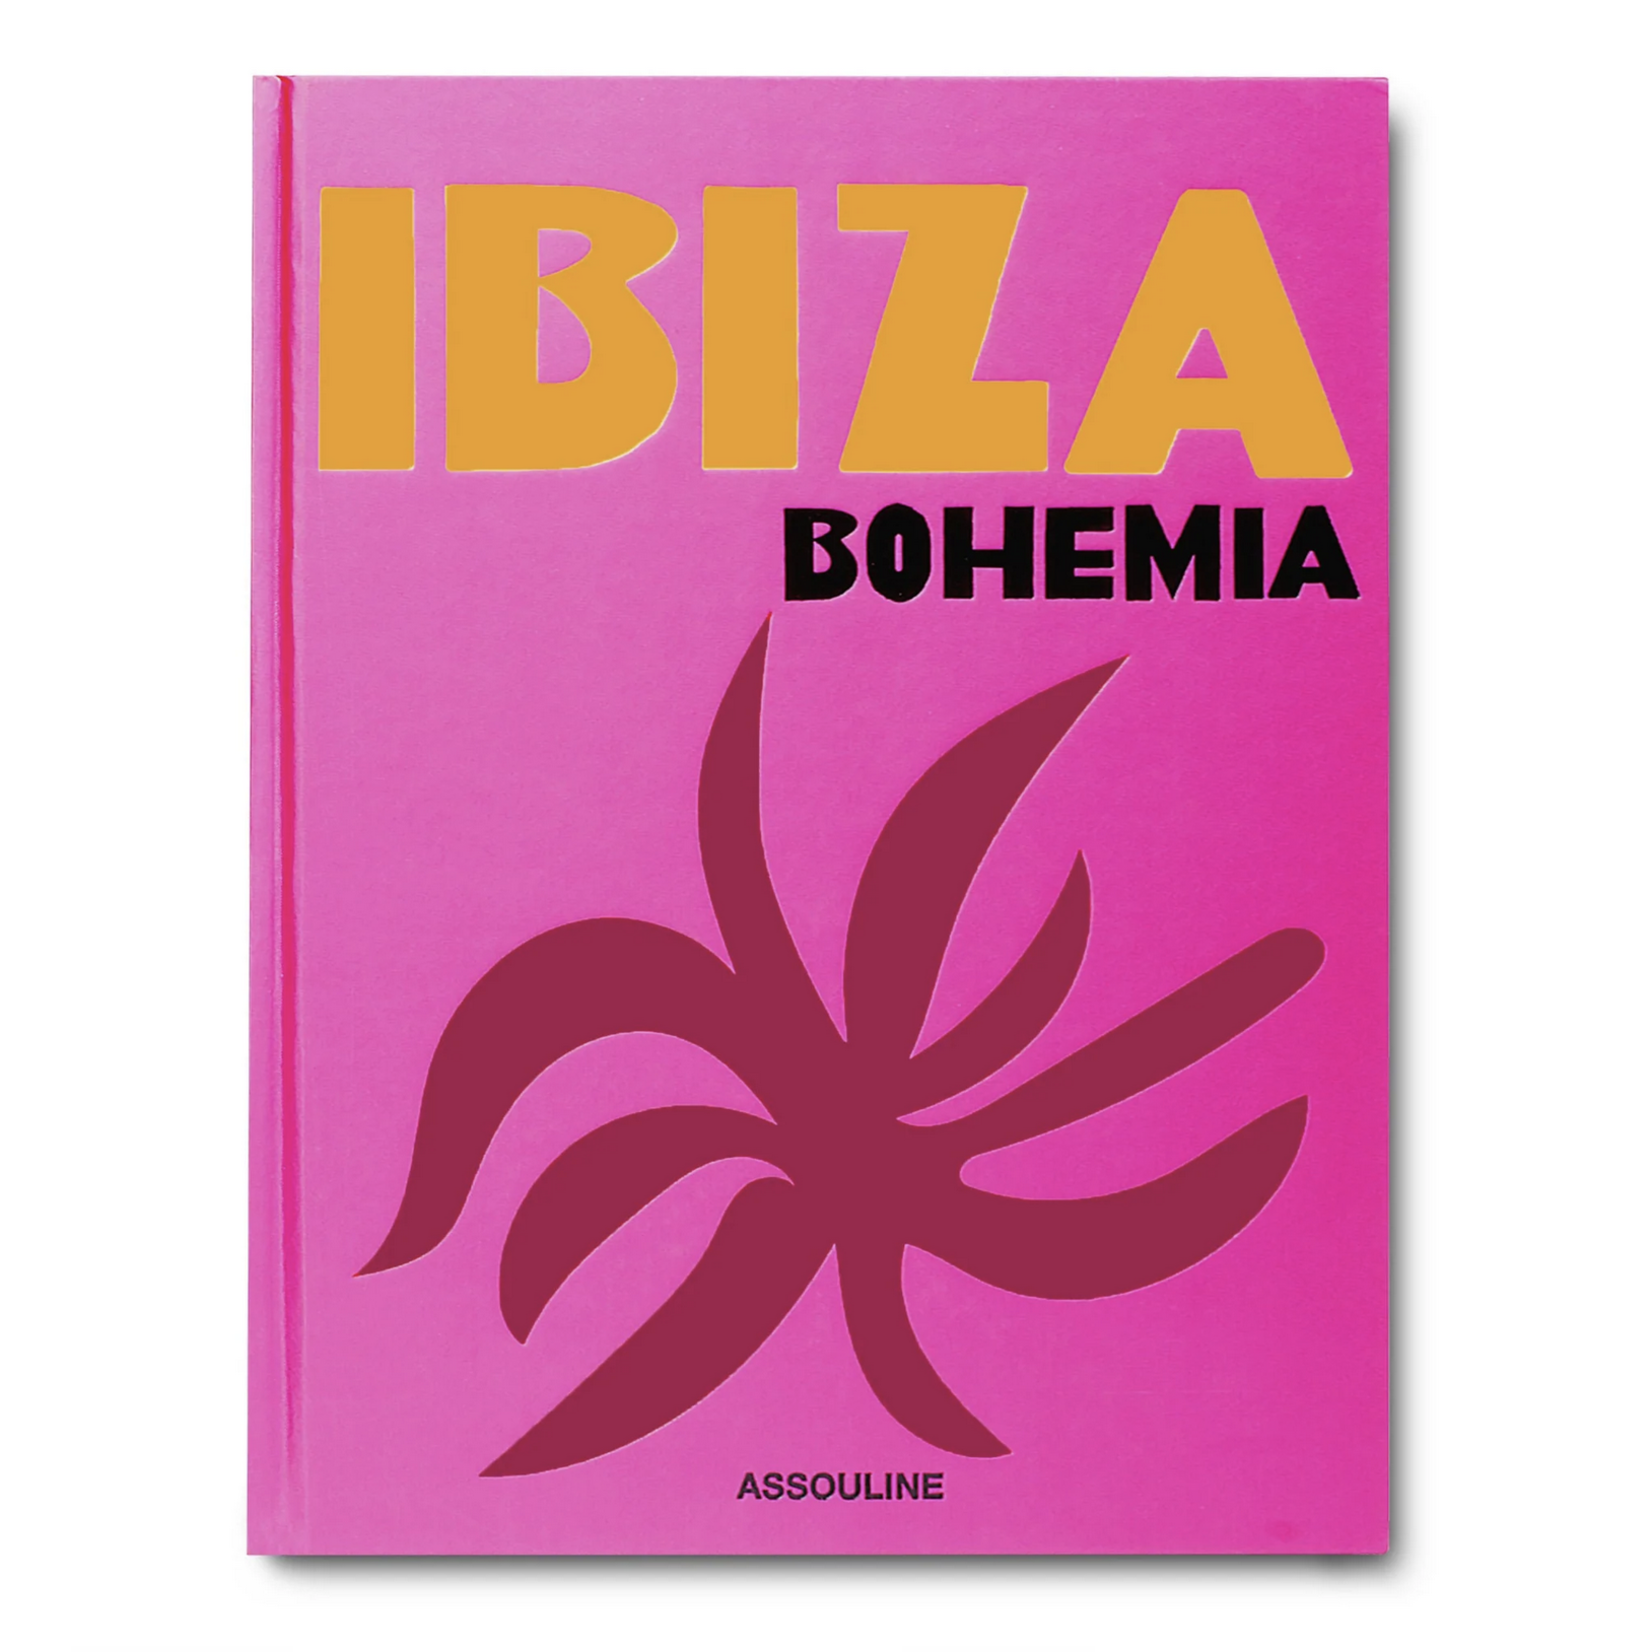 Website Ibiza Bohemia